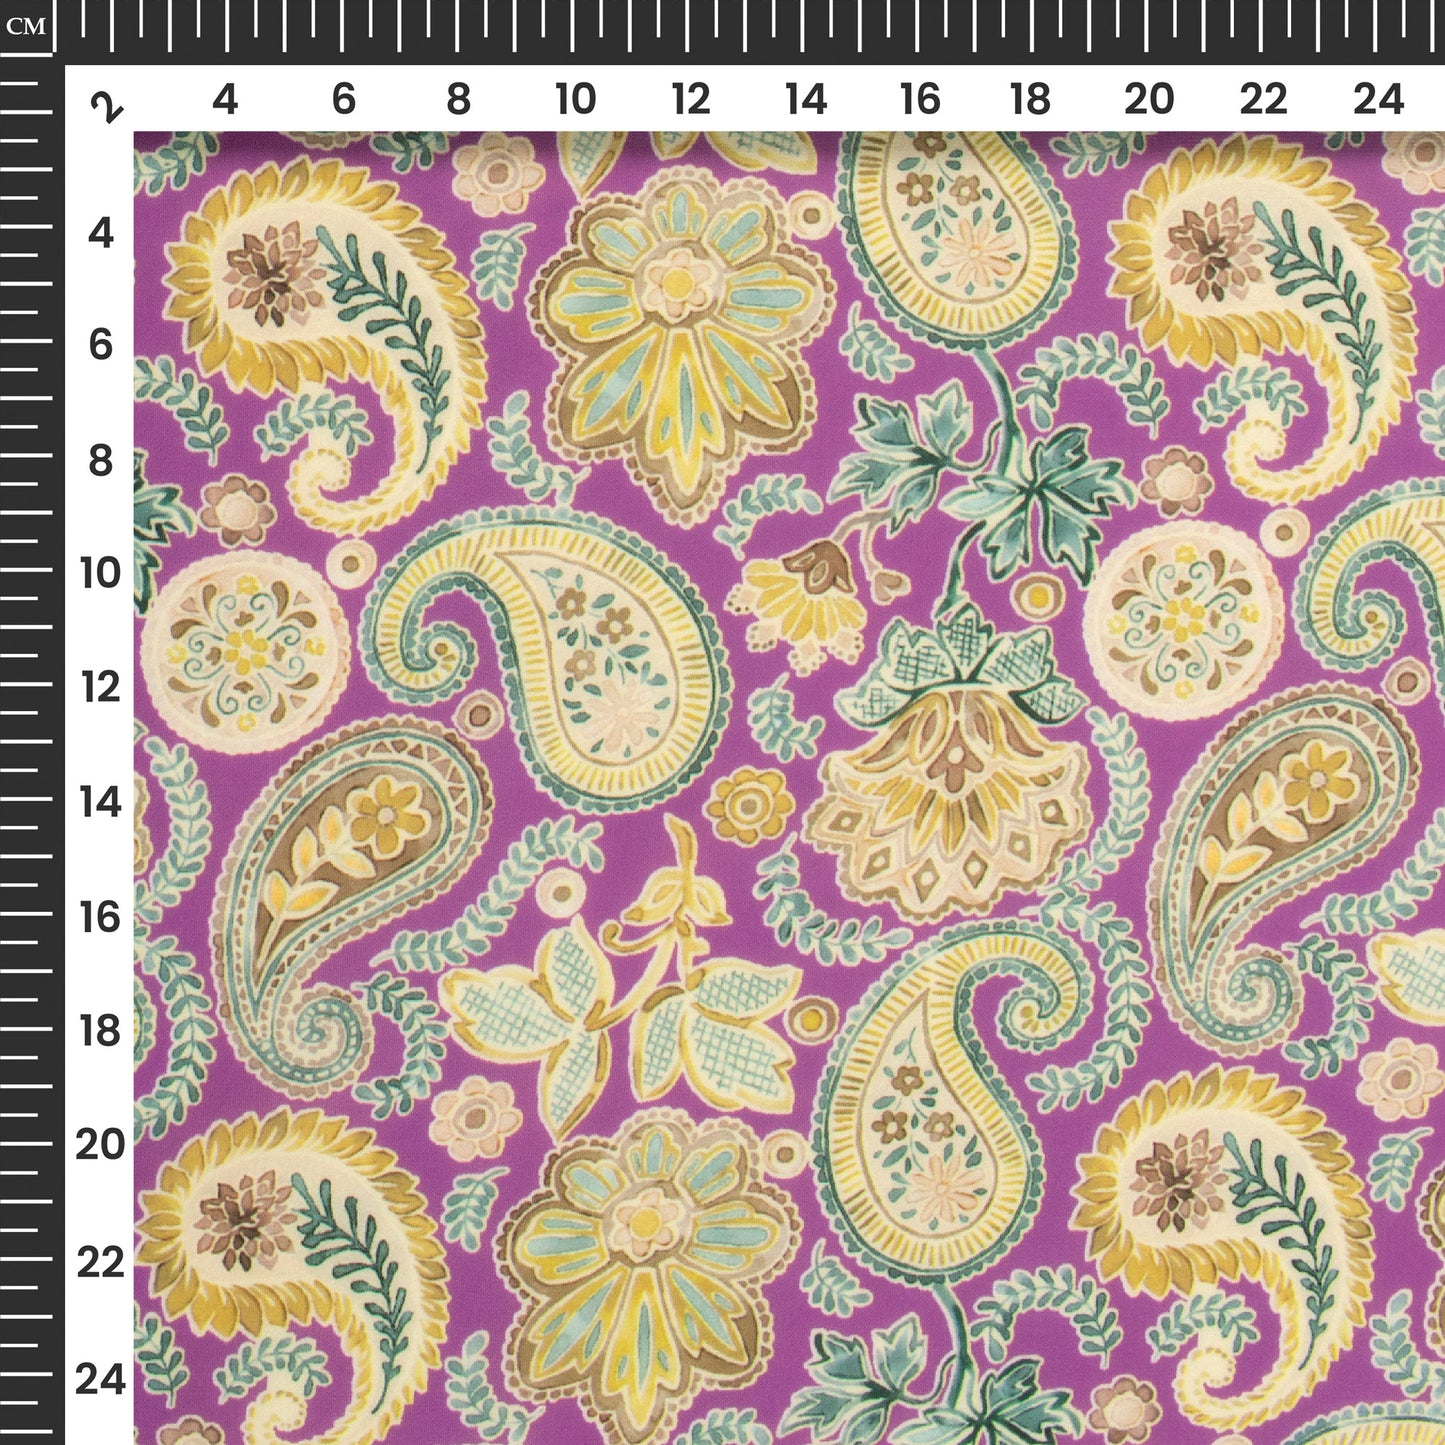 Violet Purple Paisley Digital Print BSY Crepe Fabric